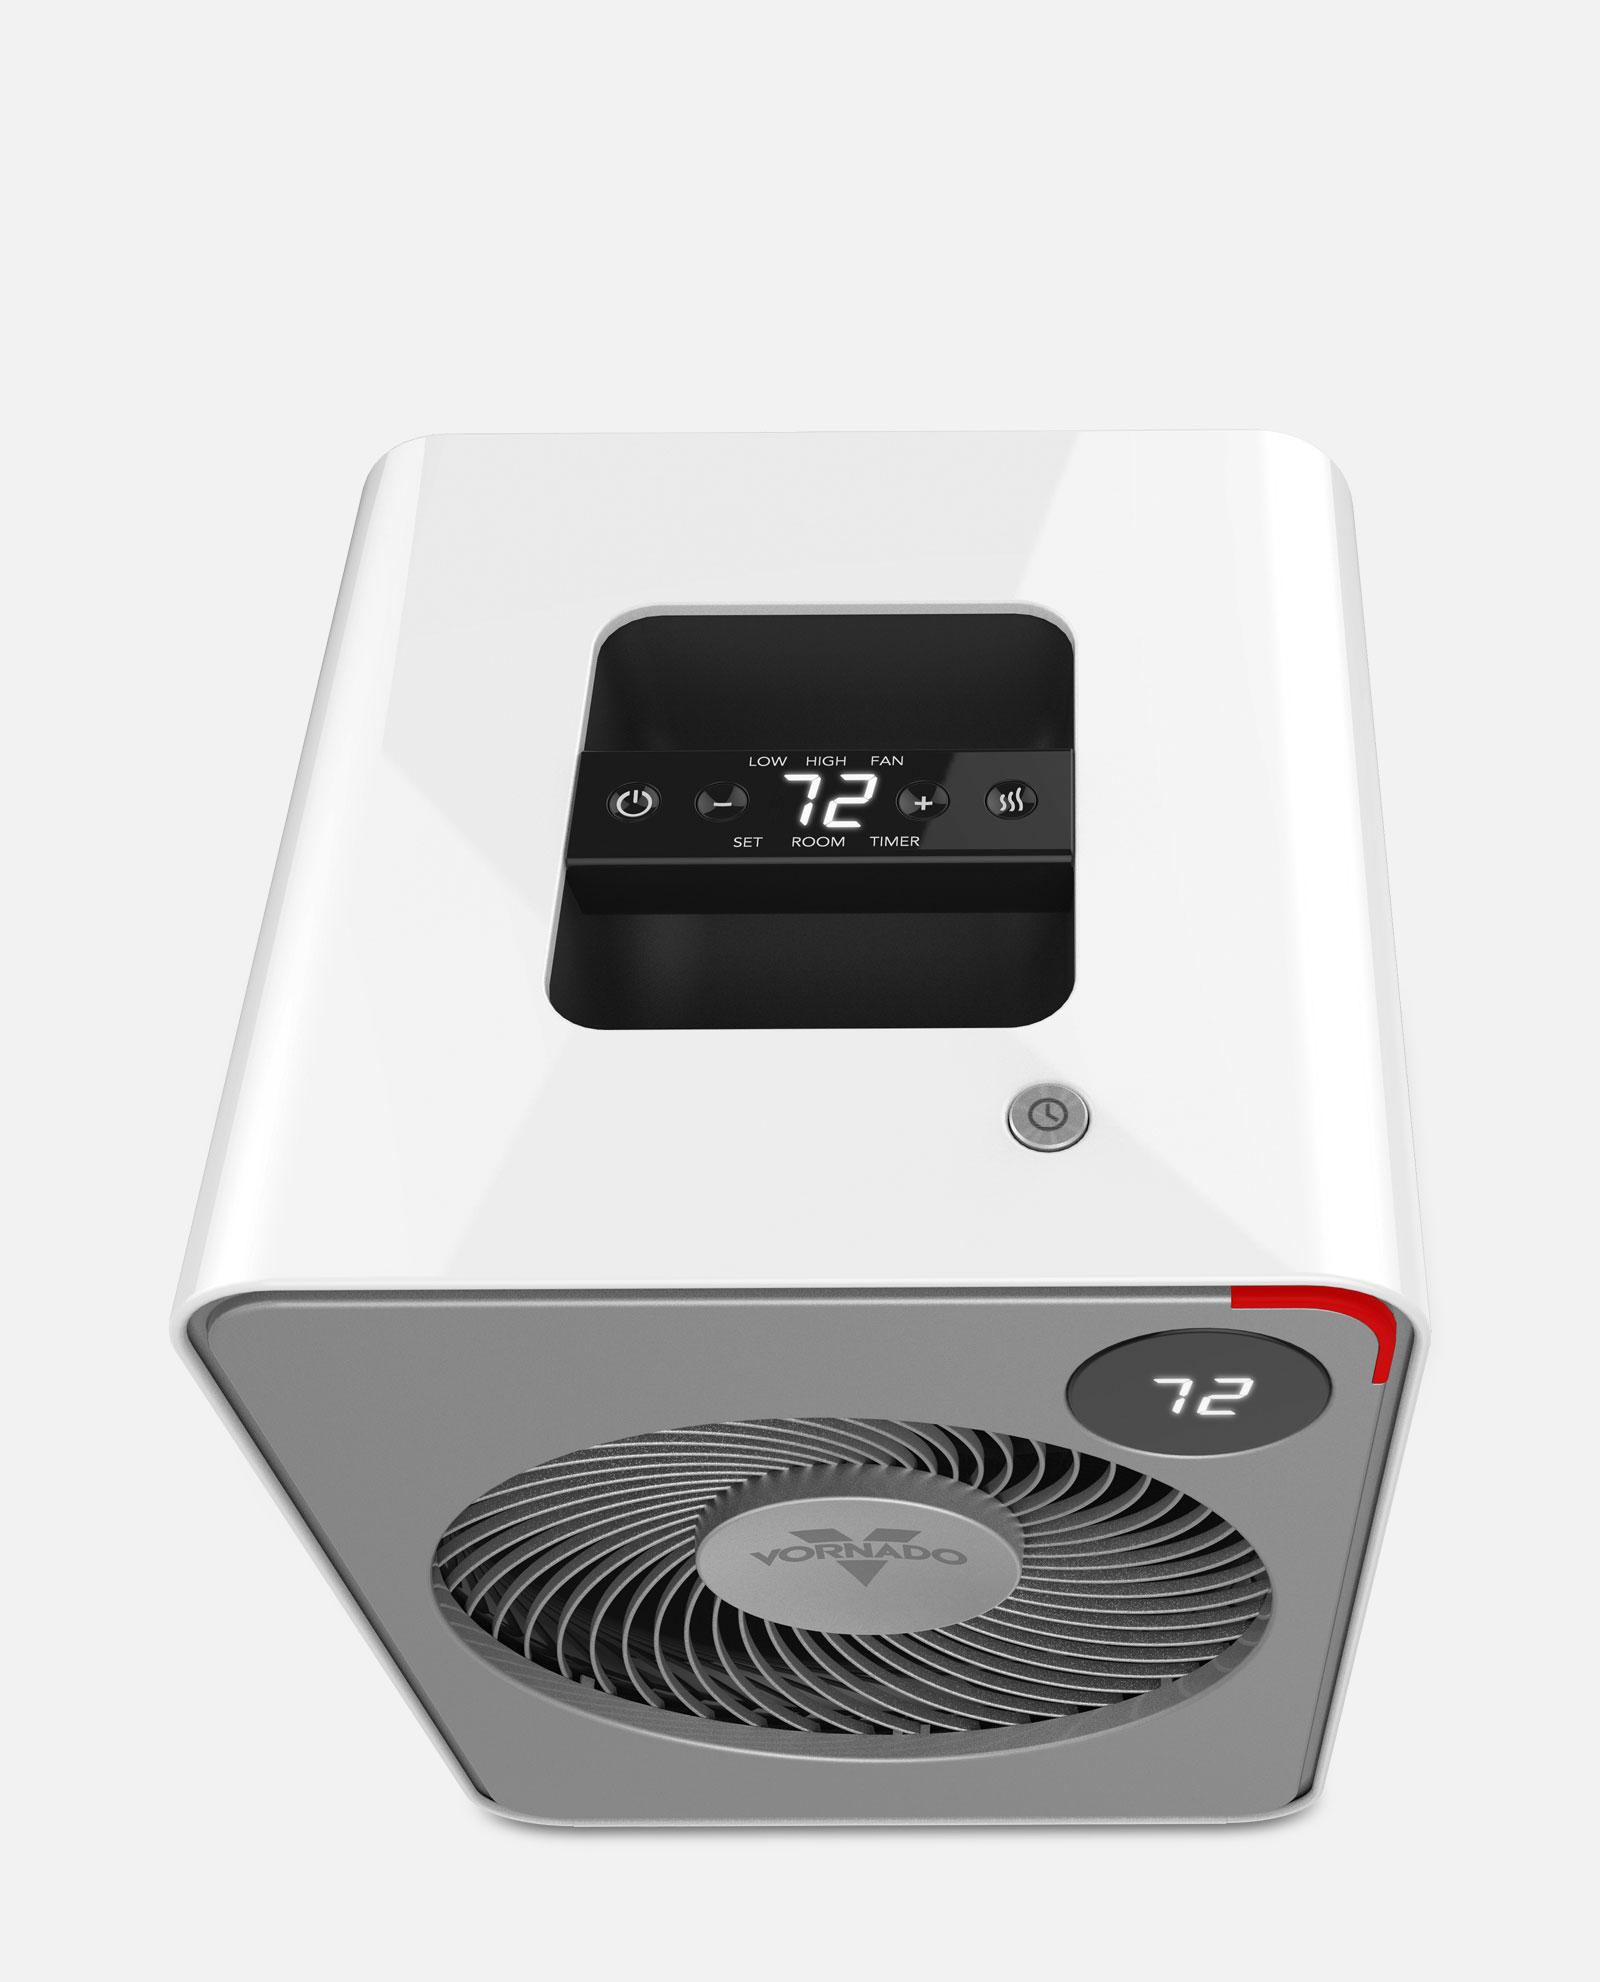 Vornado Up to 1500-Watt Fan Compact Personal Indoor Electric Space